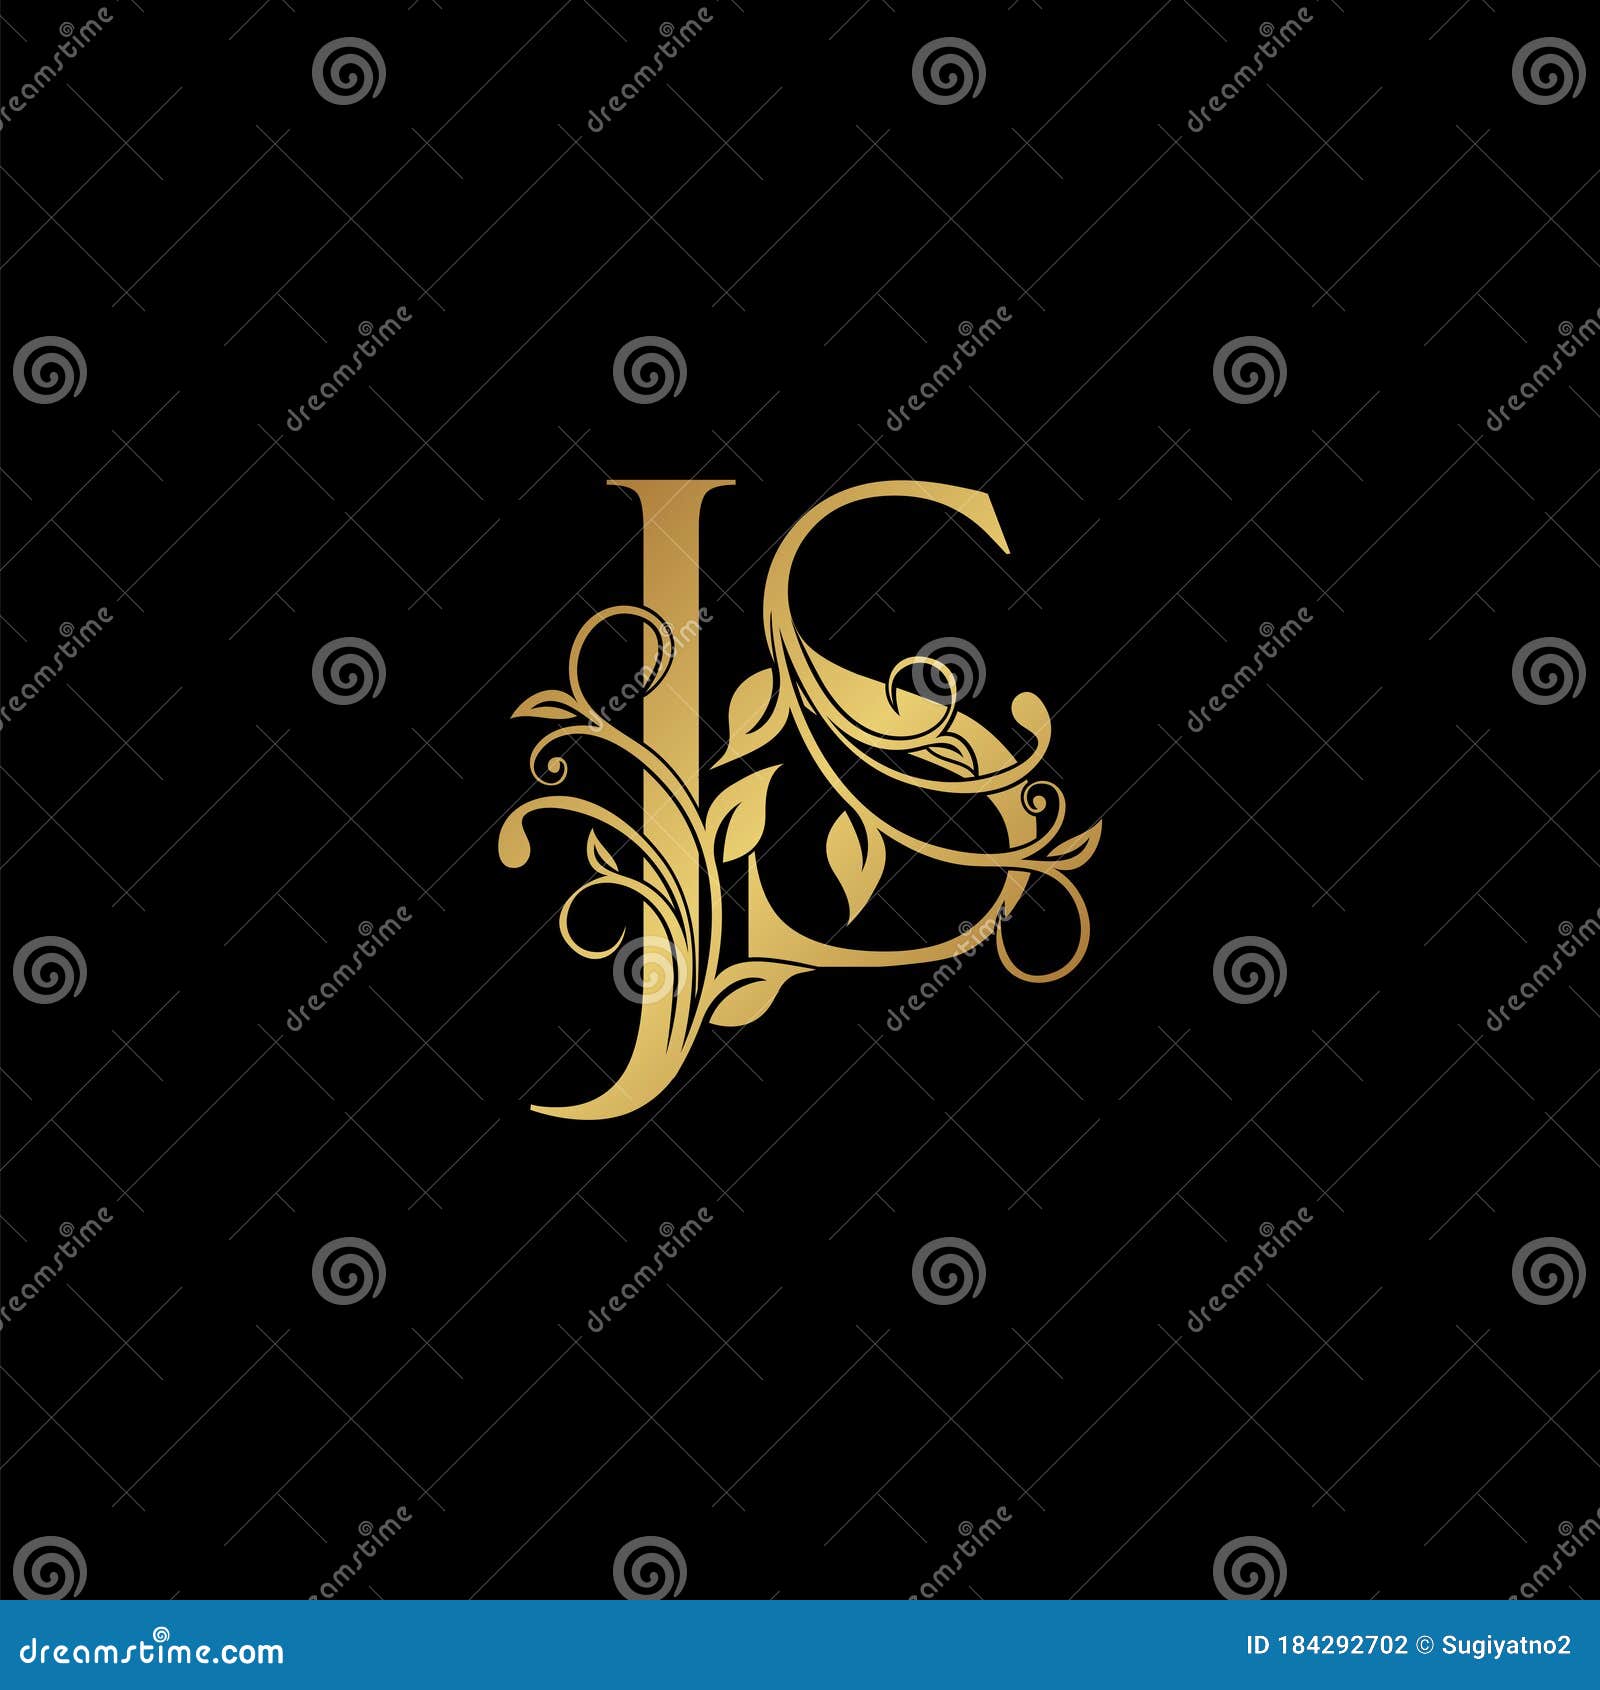 J s letter logo abstract design on black color Vector Image